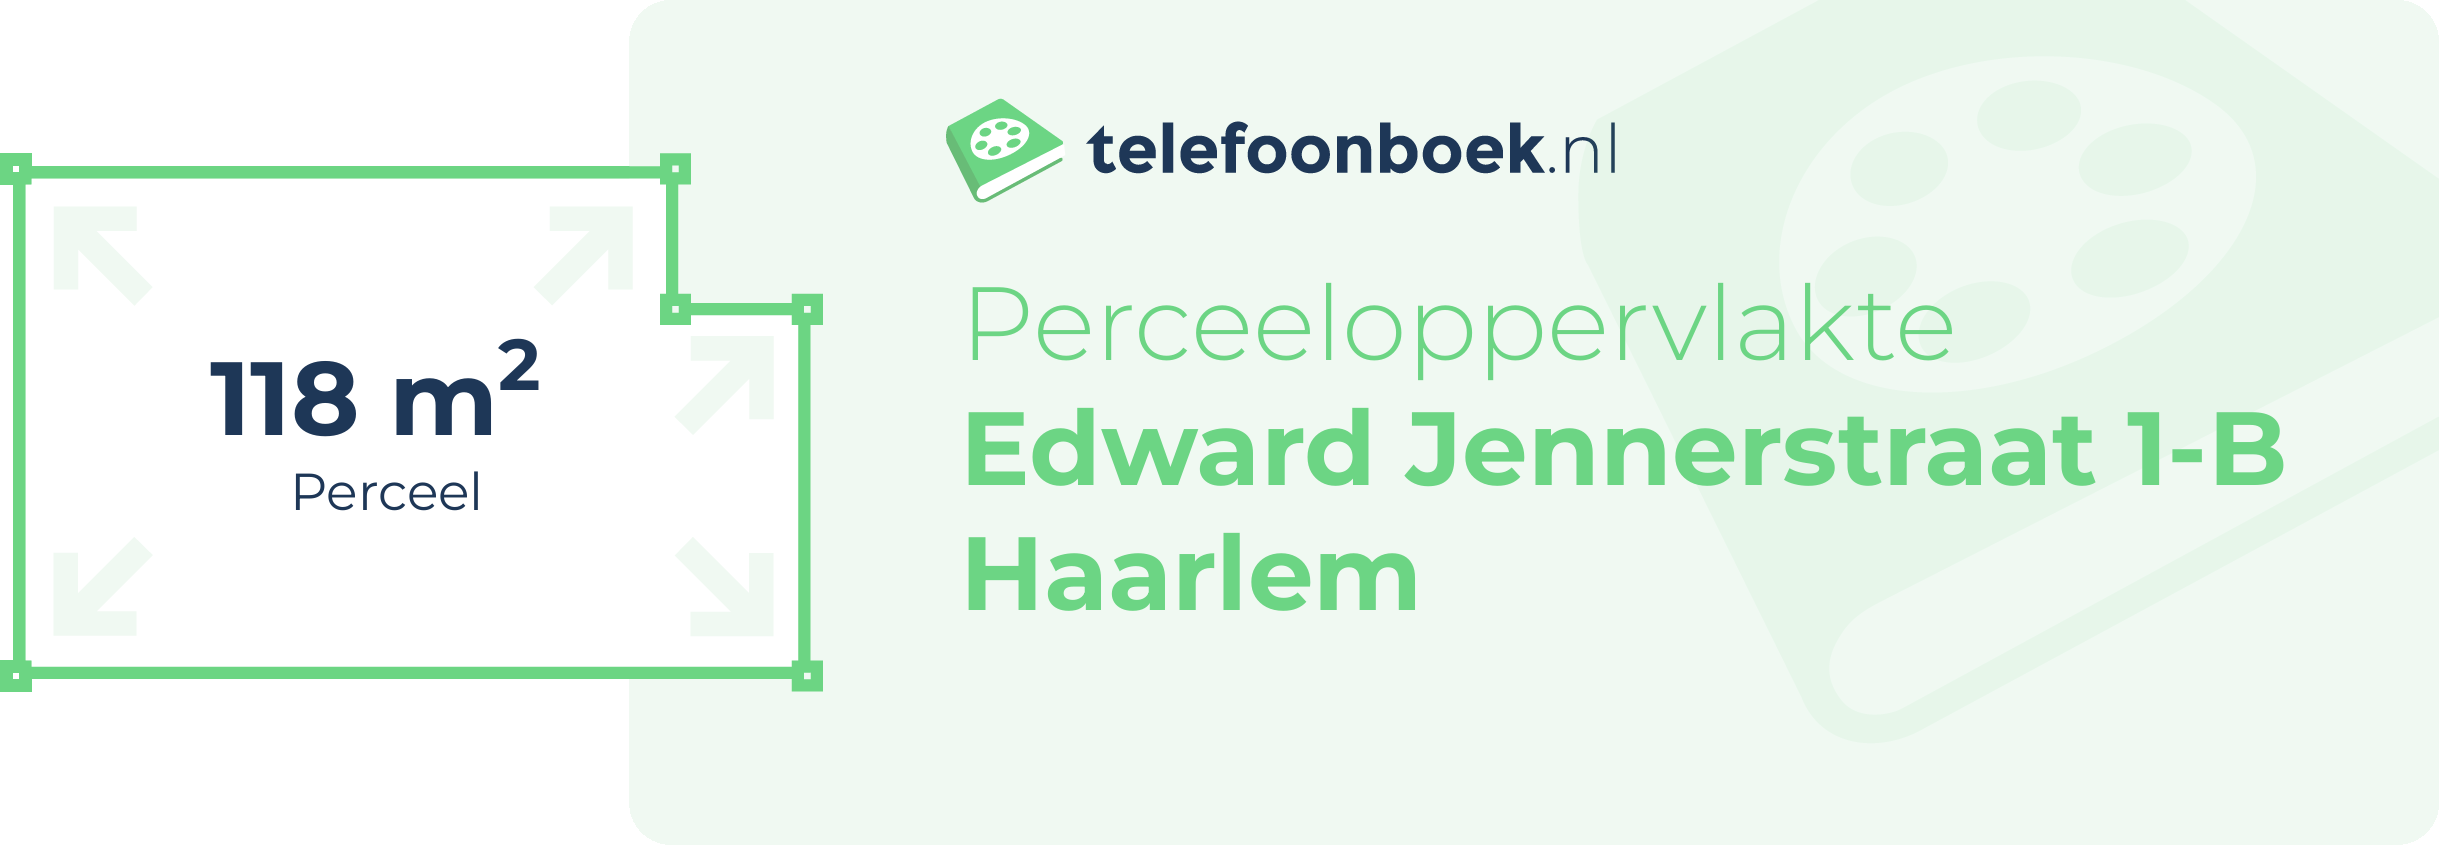 Perceeloppervlakte Edward Jennerstraat 1-B Haarlem